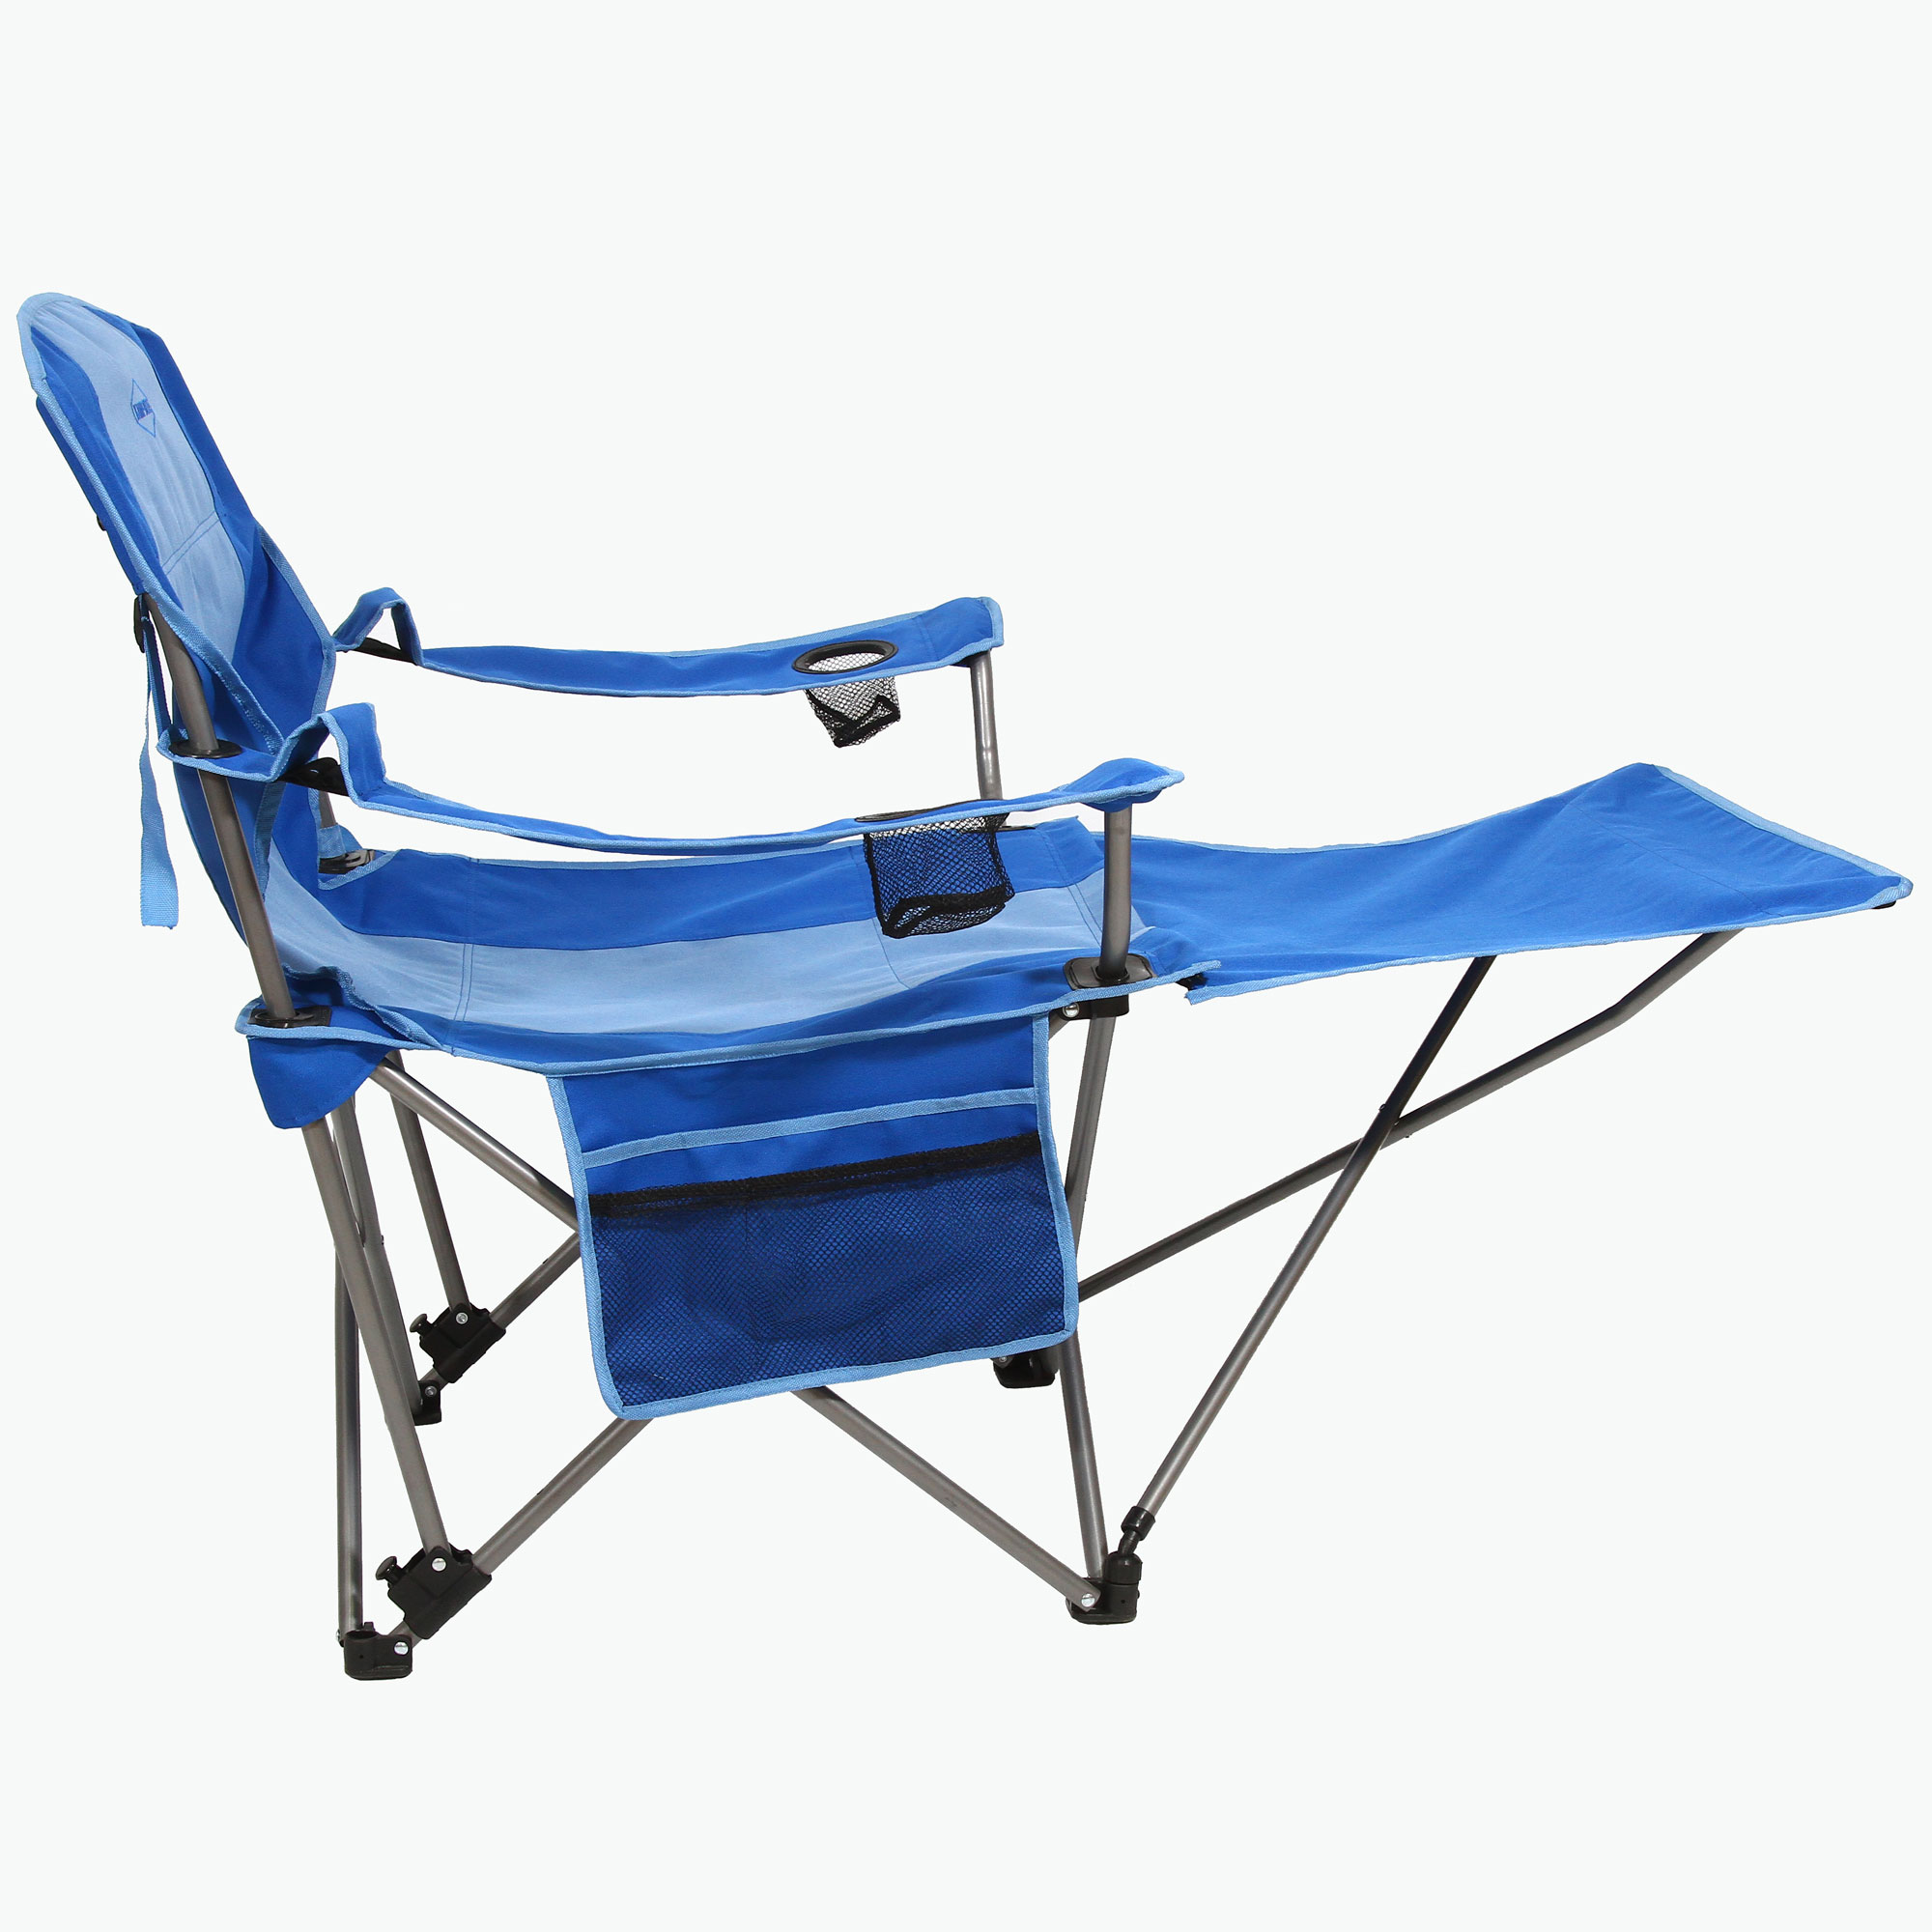 KampRite Outdoor Camping Beach Patio Folding Chair w